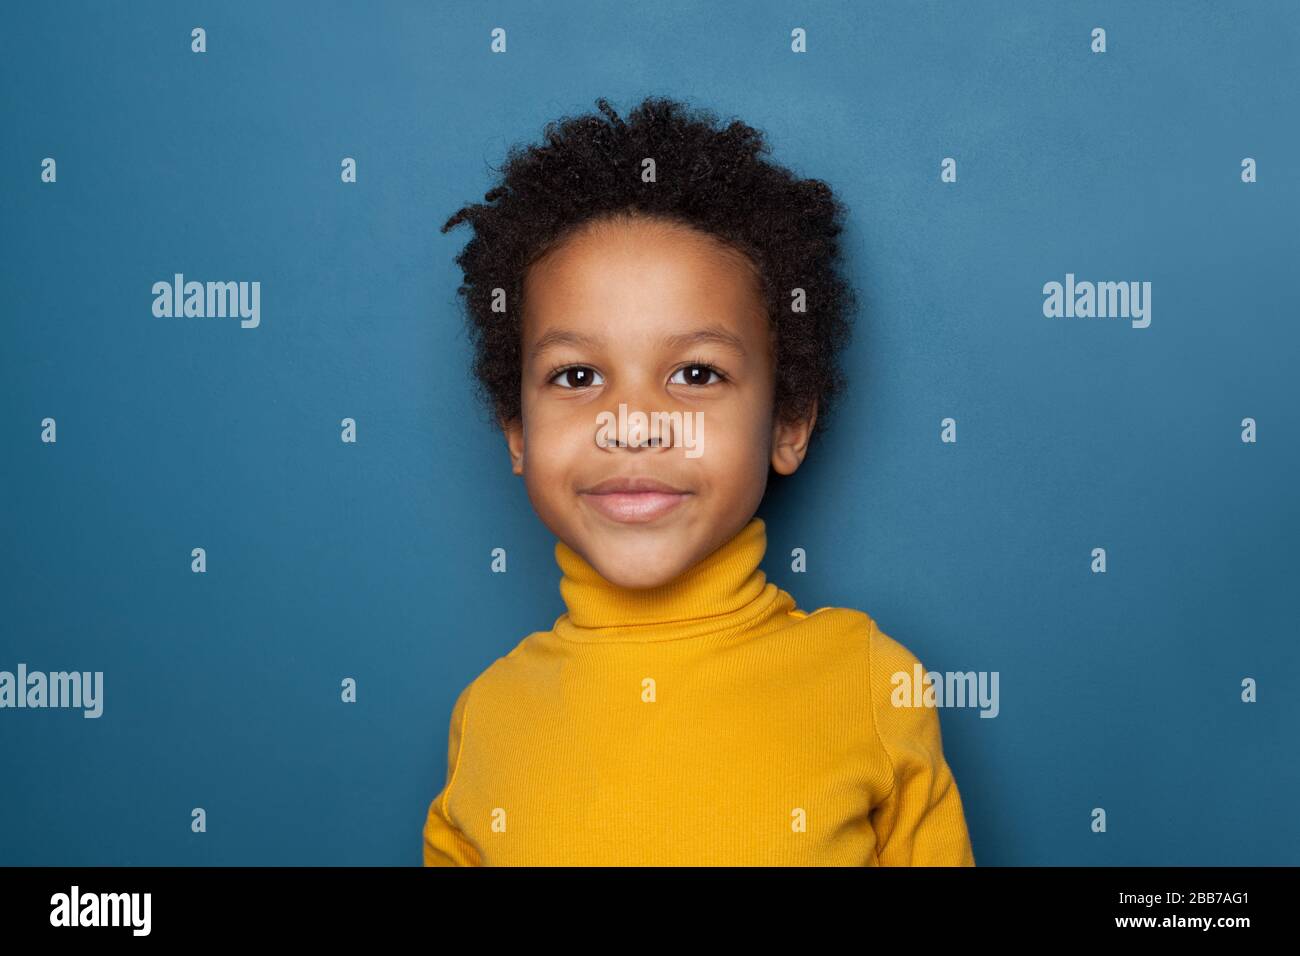 Curious black kid portrait. Little child boy smiling on blue background Stock Photo